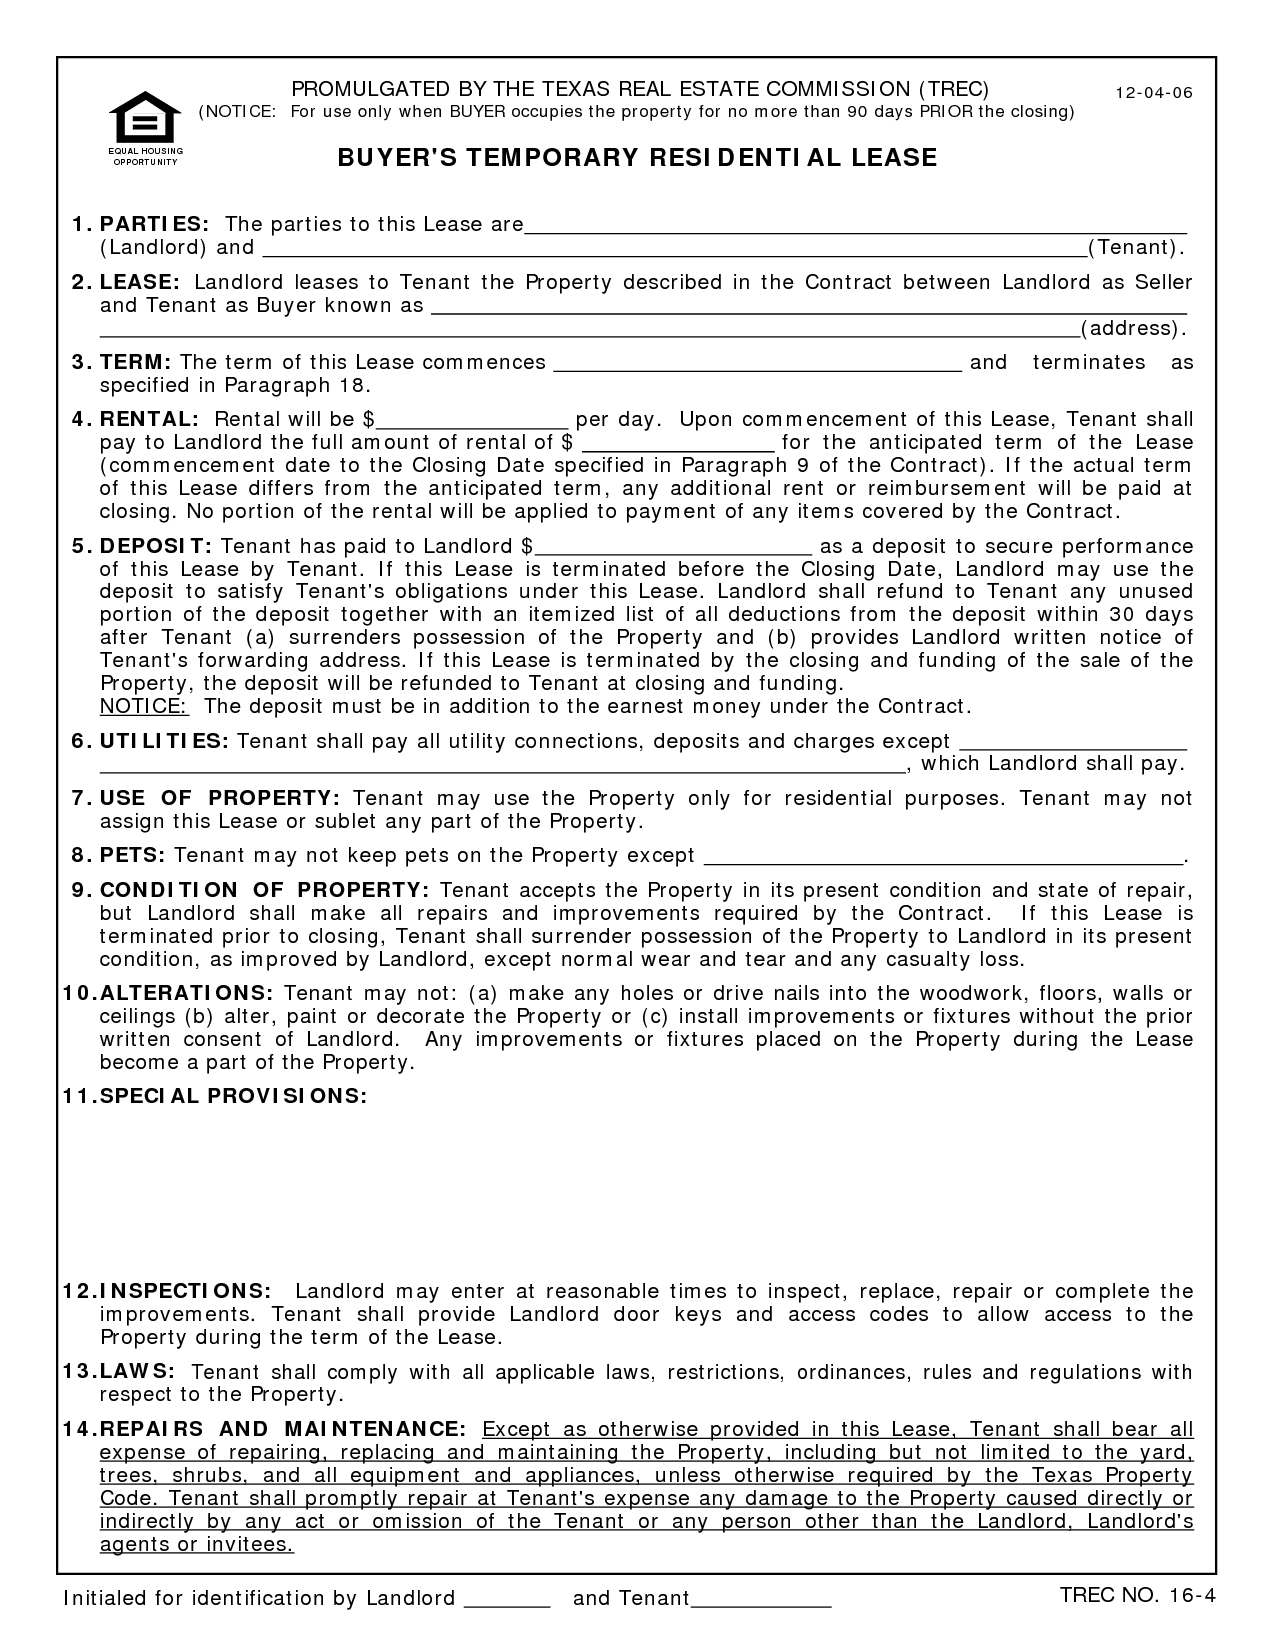 Print Free Printable Lease Agreement Texas - Id52092 Opendata - Free Printable Lease Agreement Texas